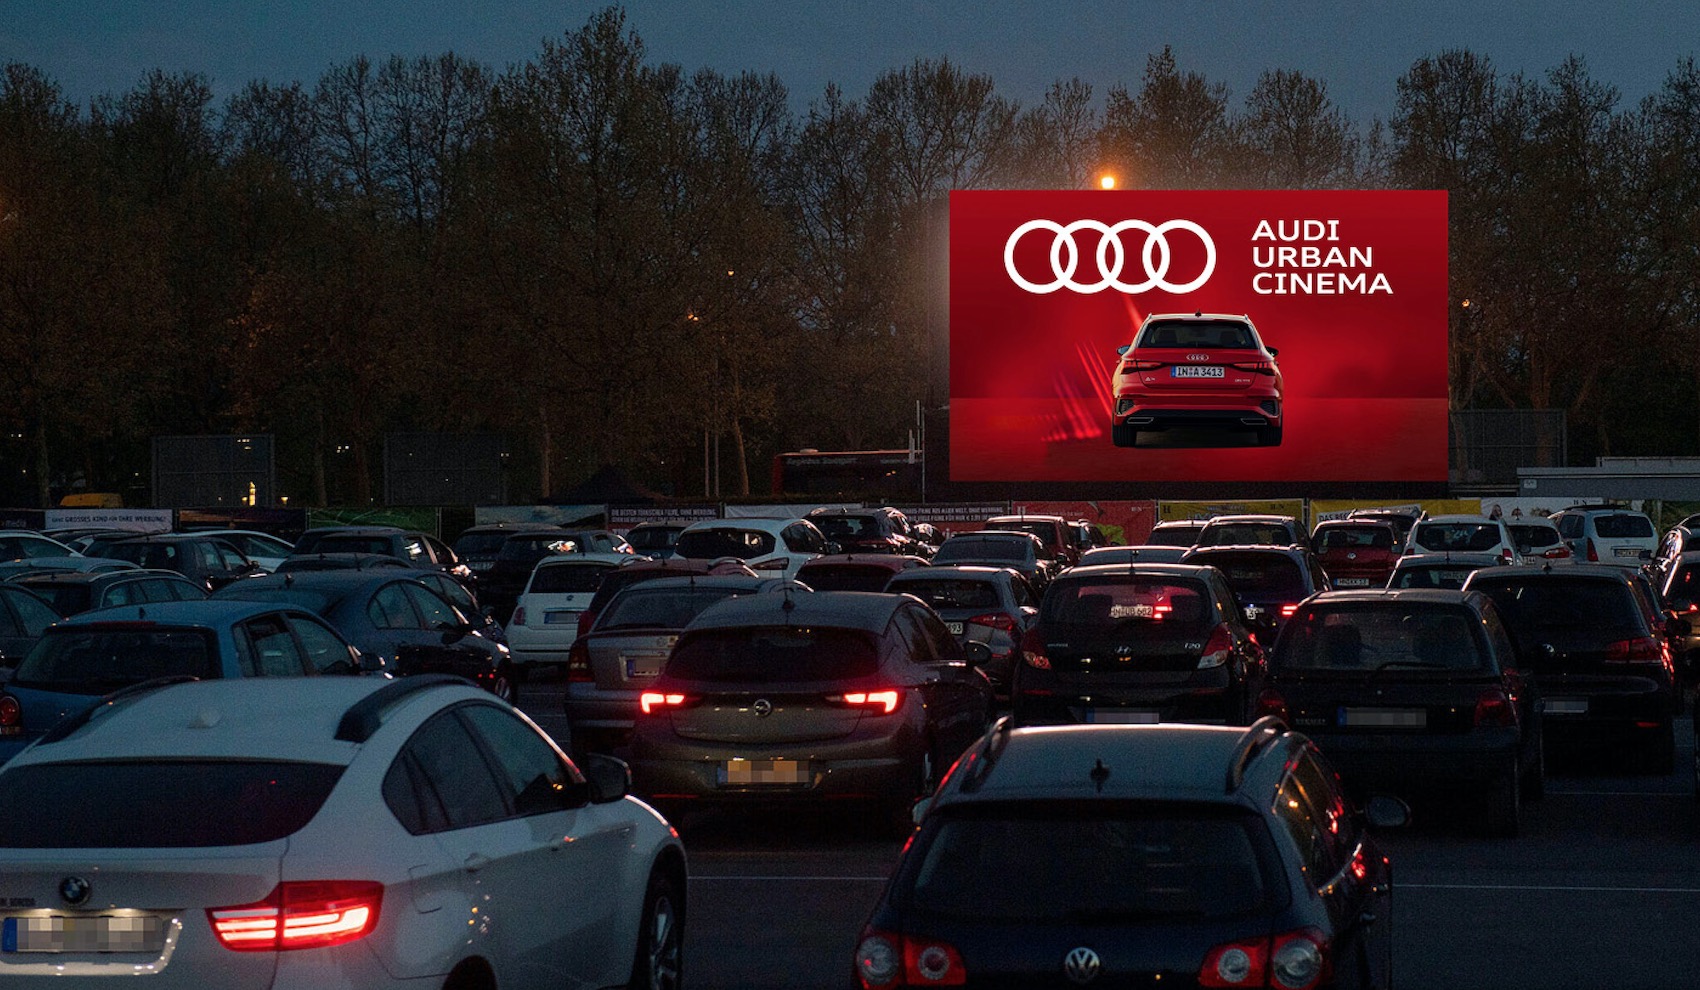 Audi Urban Cinema Keyvisual Development